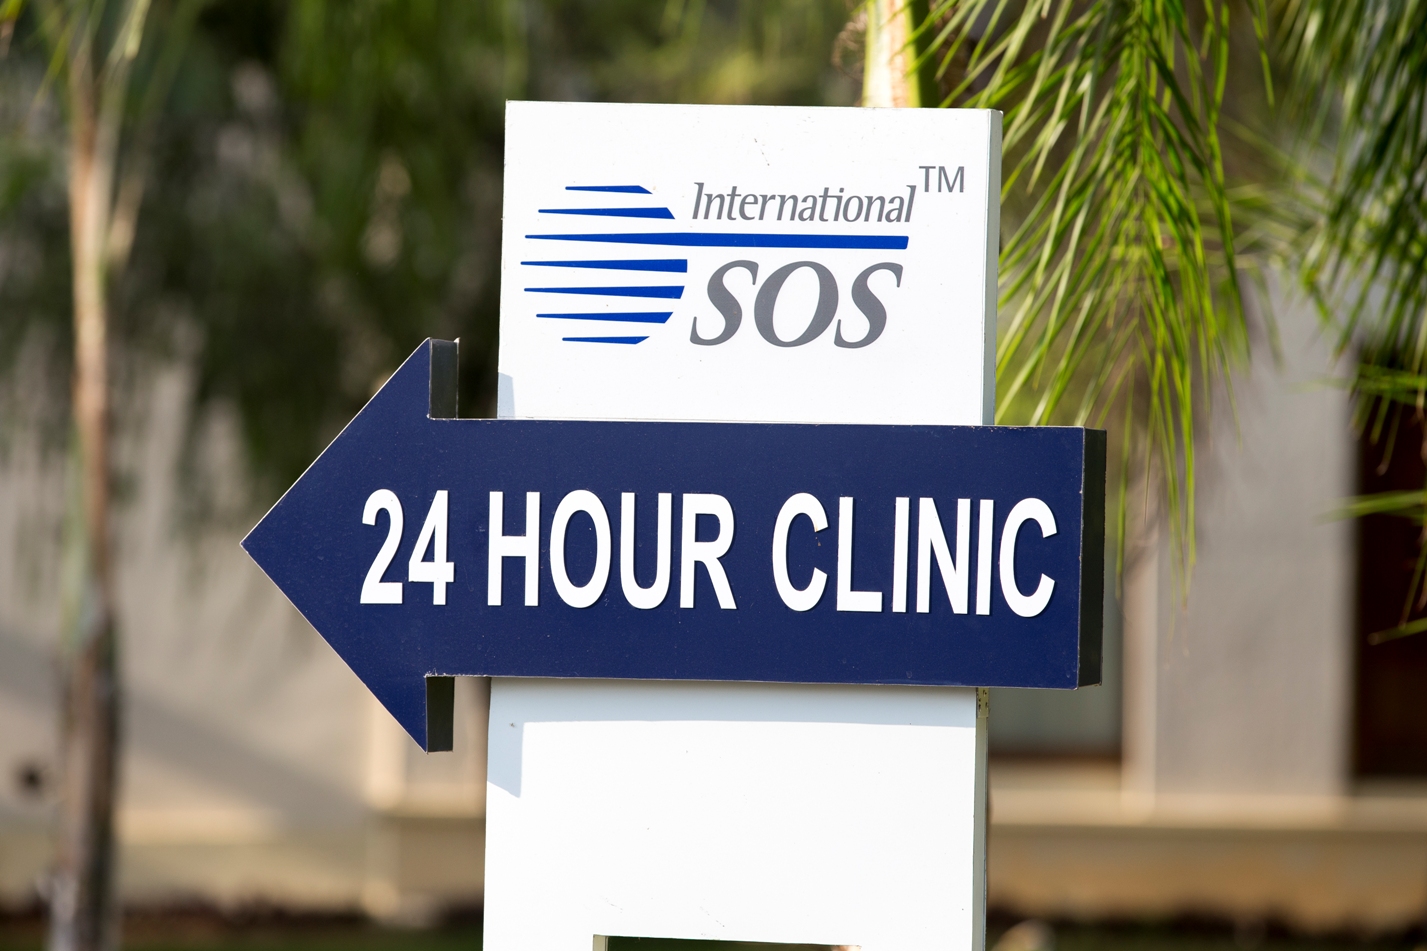 International SOS Clinic in Yangon. (Supplied)